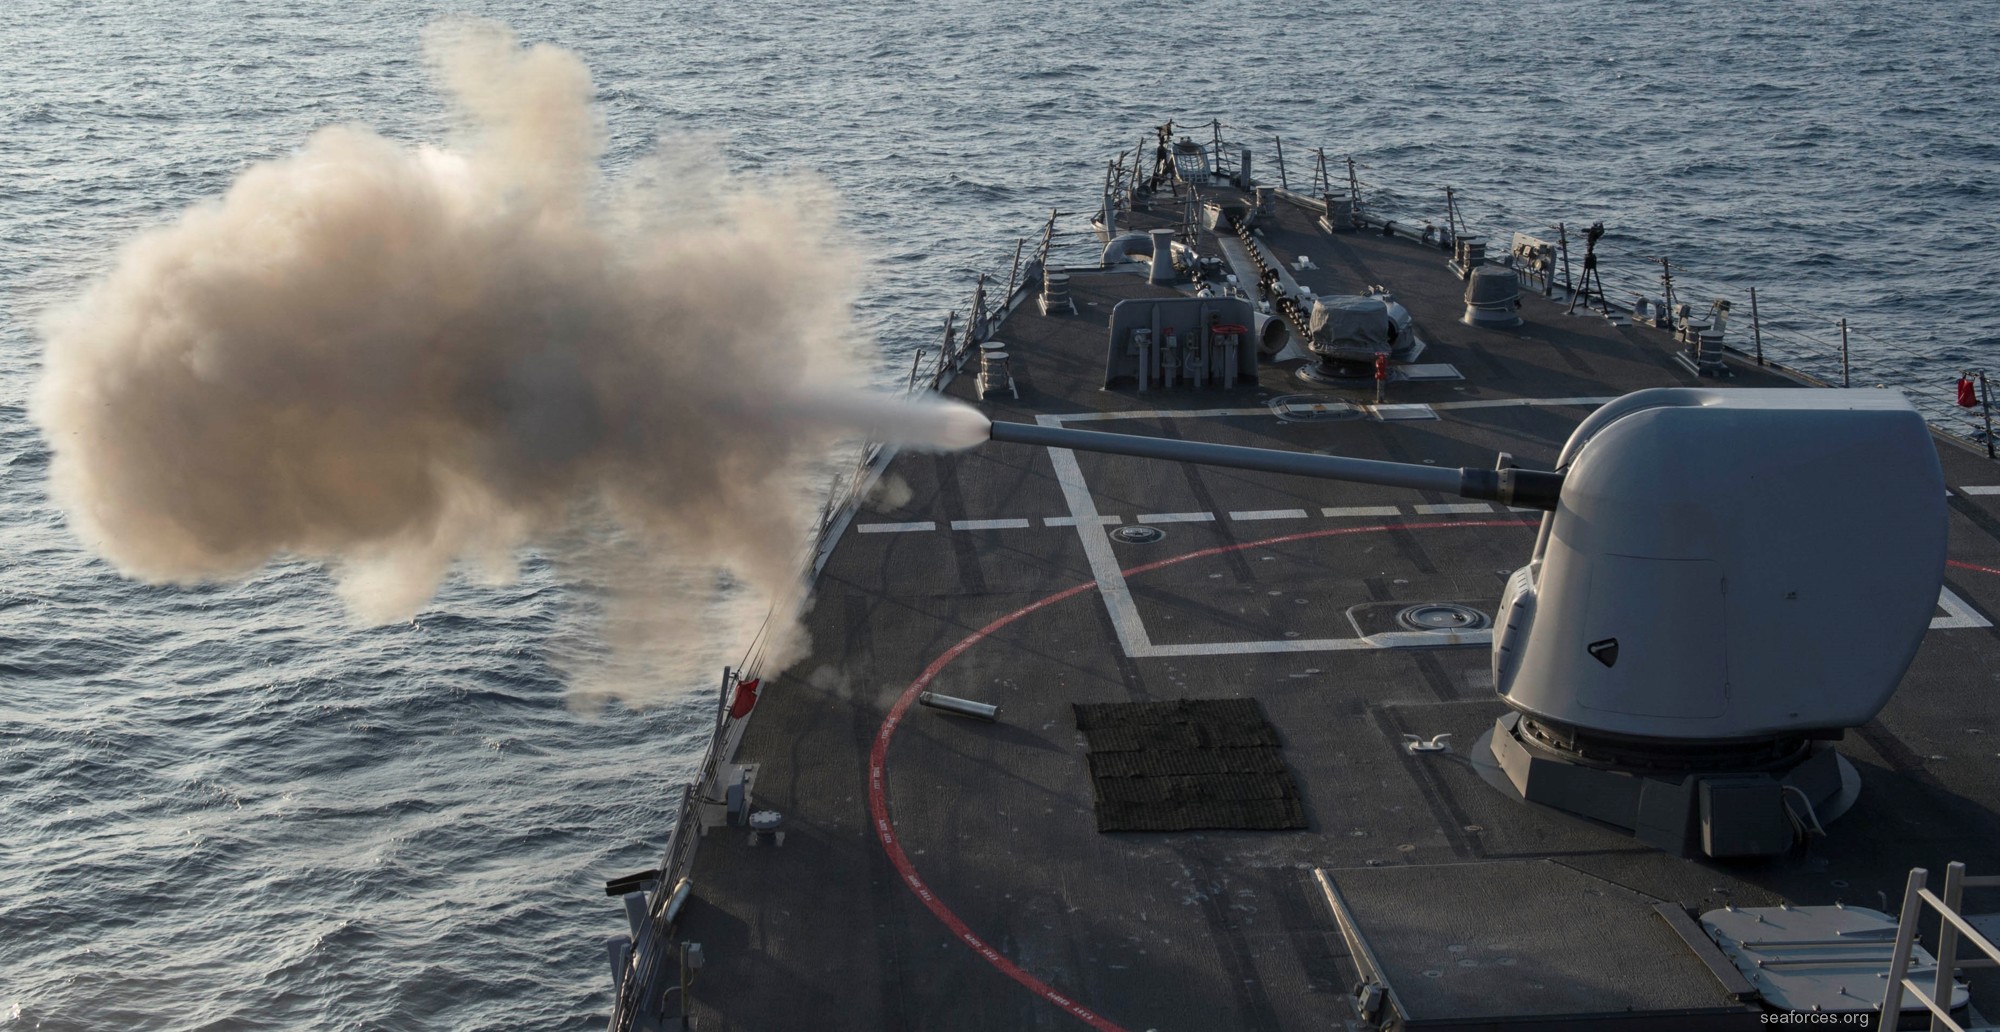 ddg-55 uss stout guided missile destroyer us navy 35 mk-45 gun fire